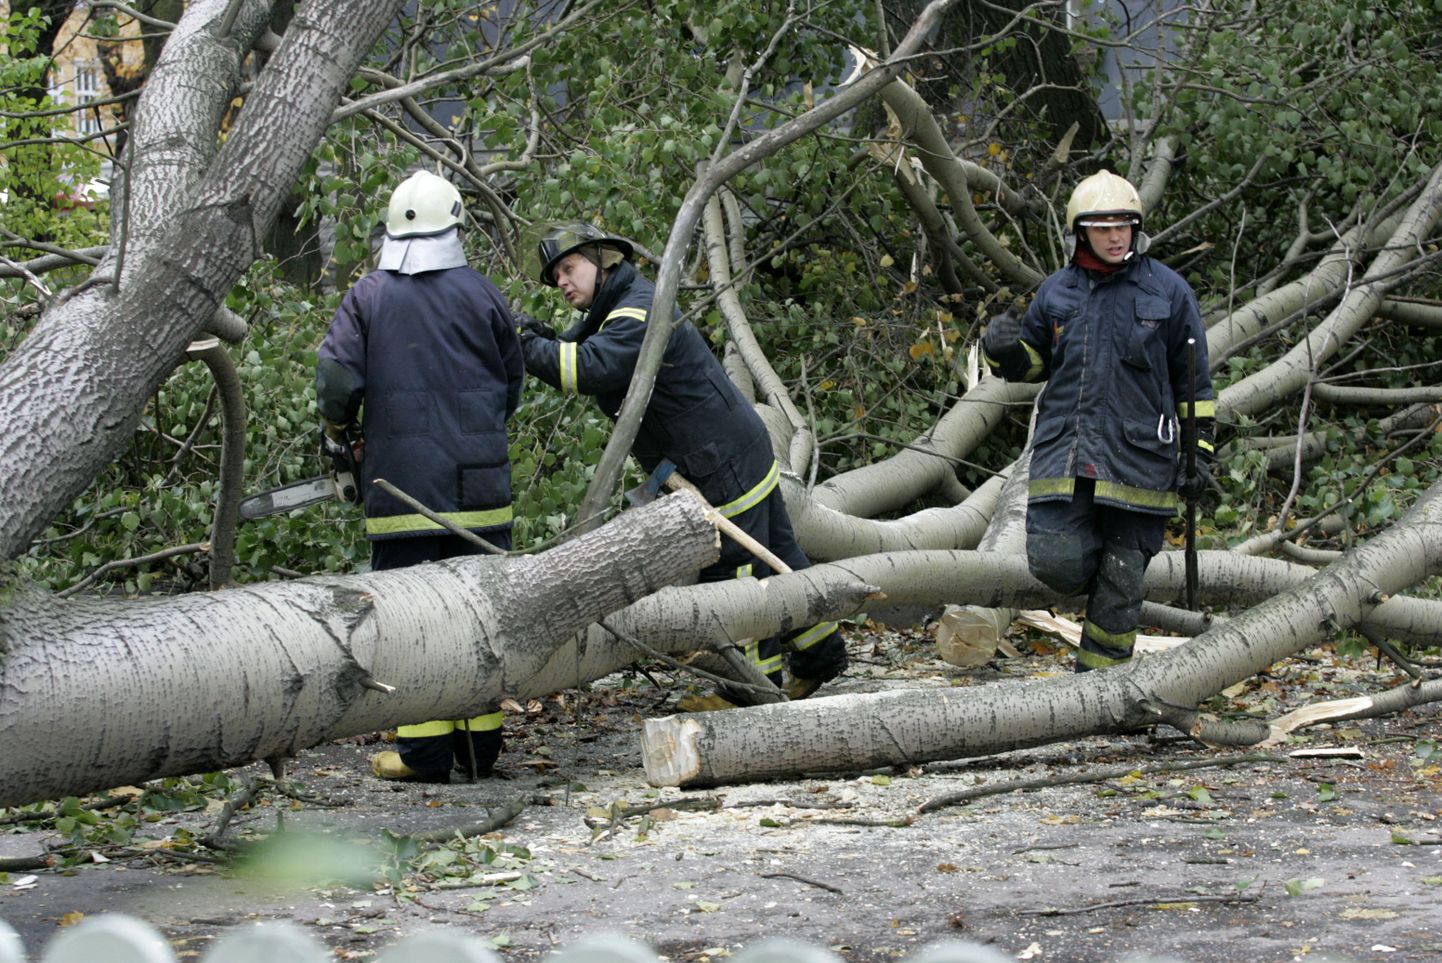 Спасатели убирают упавшее дерево. Иллюстративное фото.